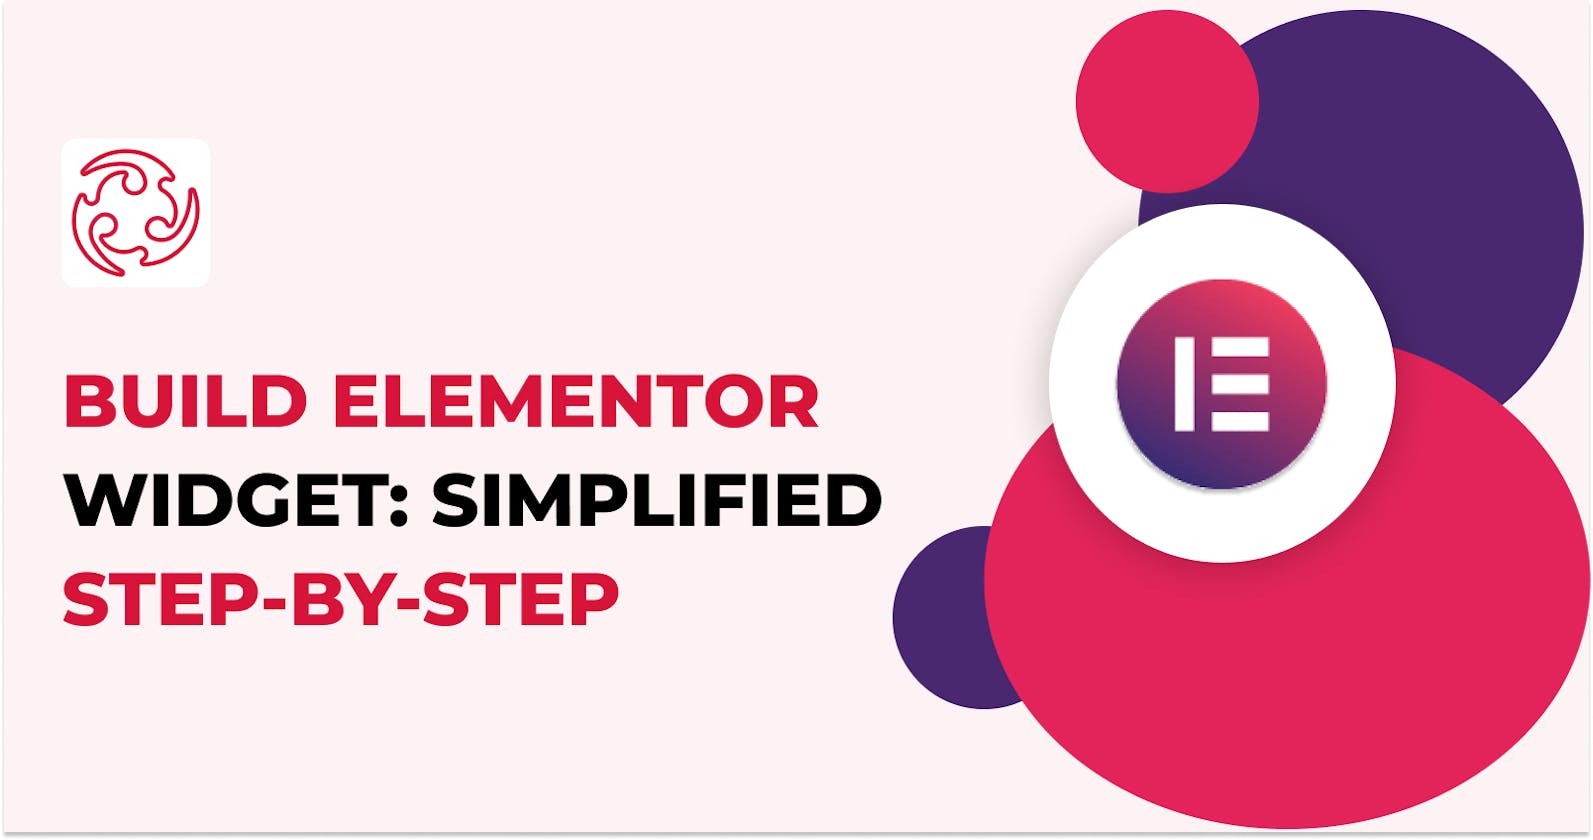 Building an Elementor Widget: Simplified Step-by-Step Tutorial